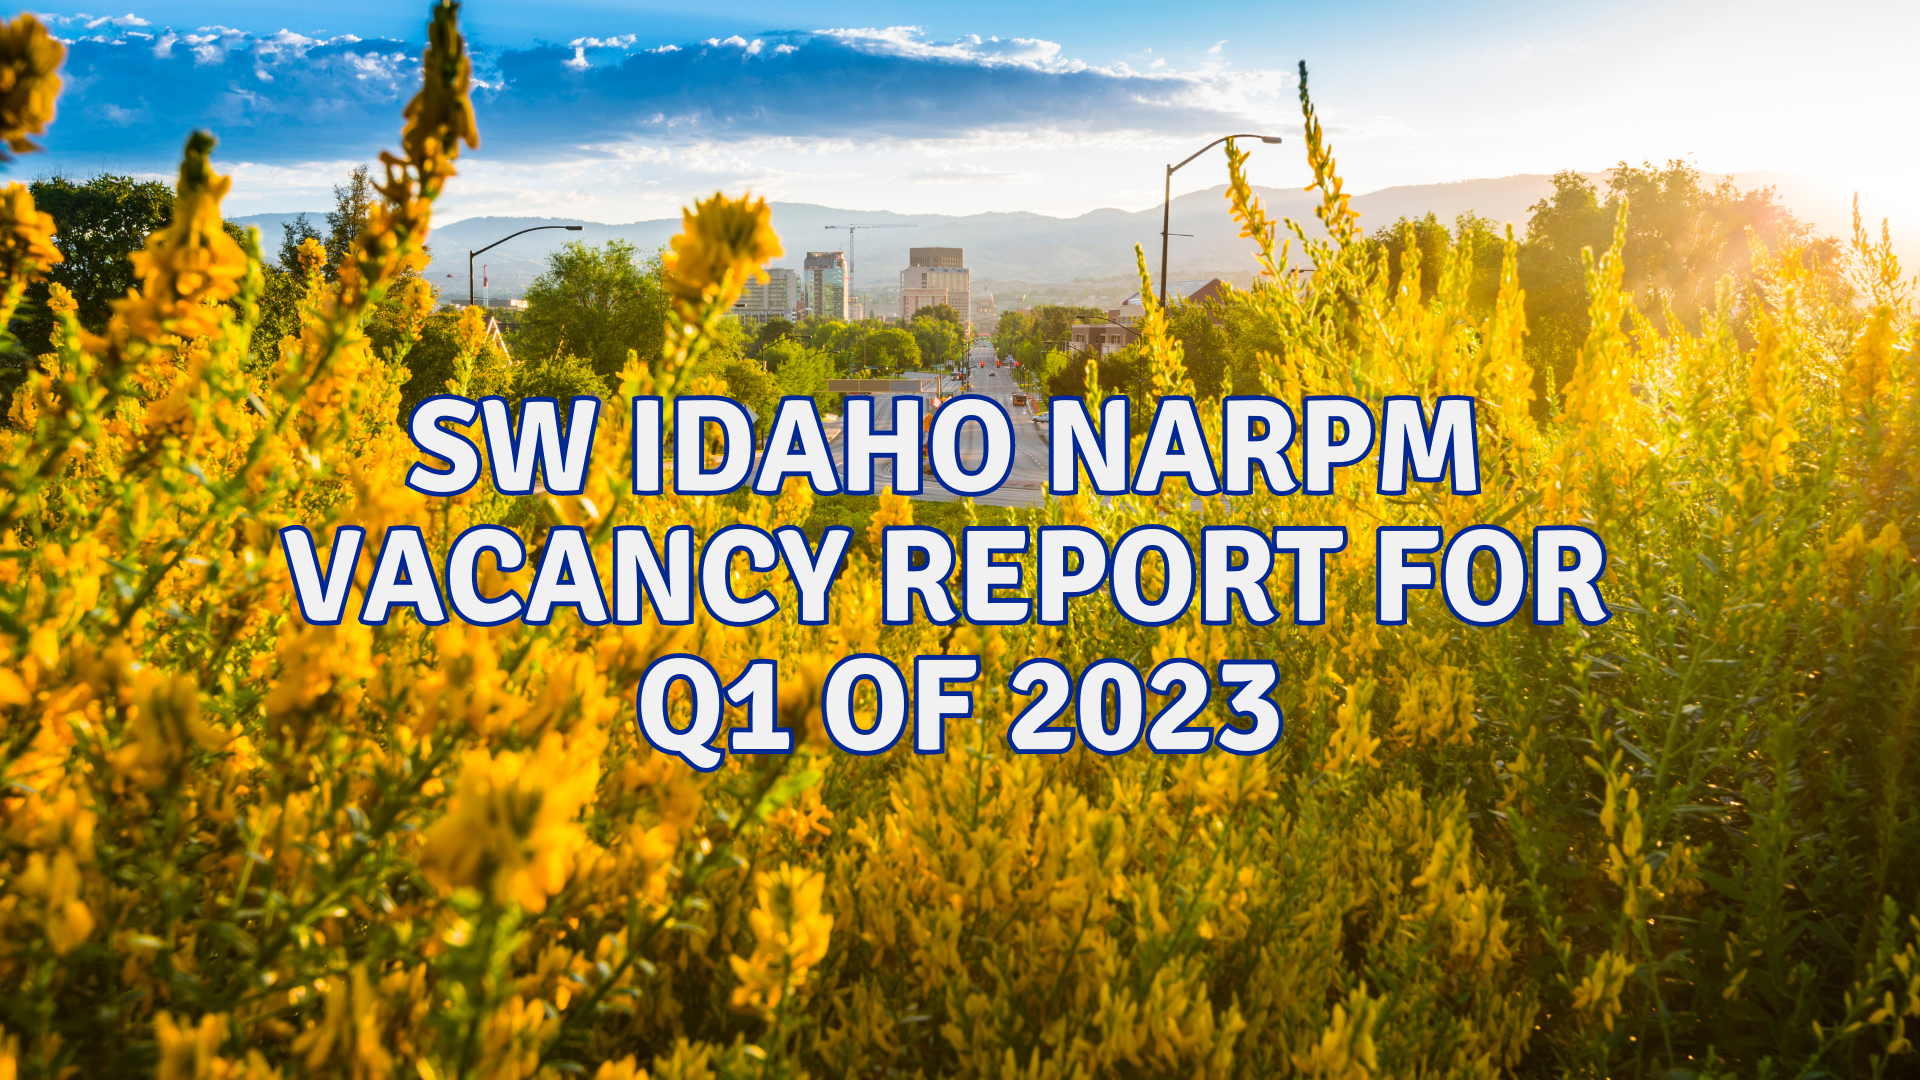 SW Idaho NARPM Vacancy Report for Q1 of 2023